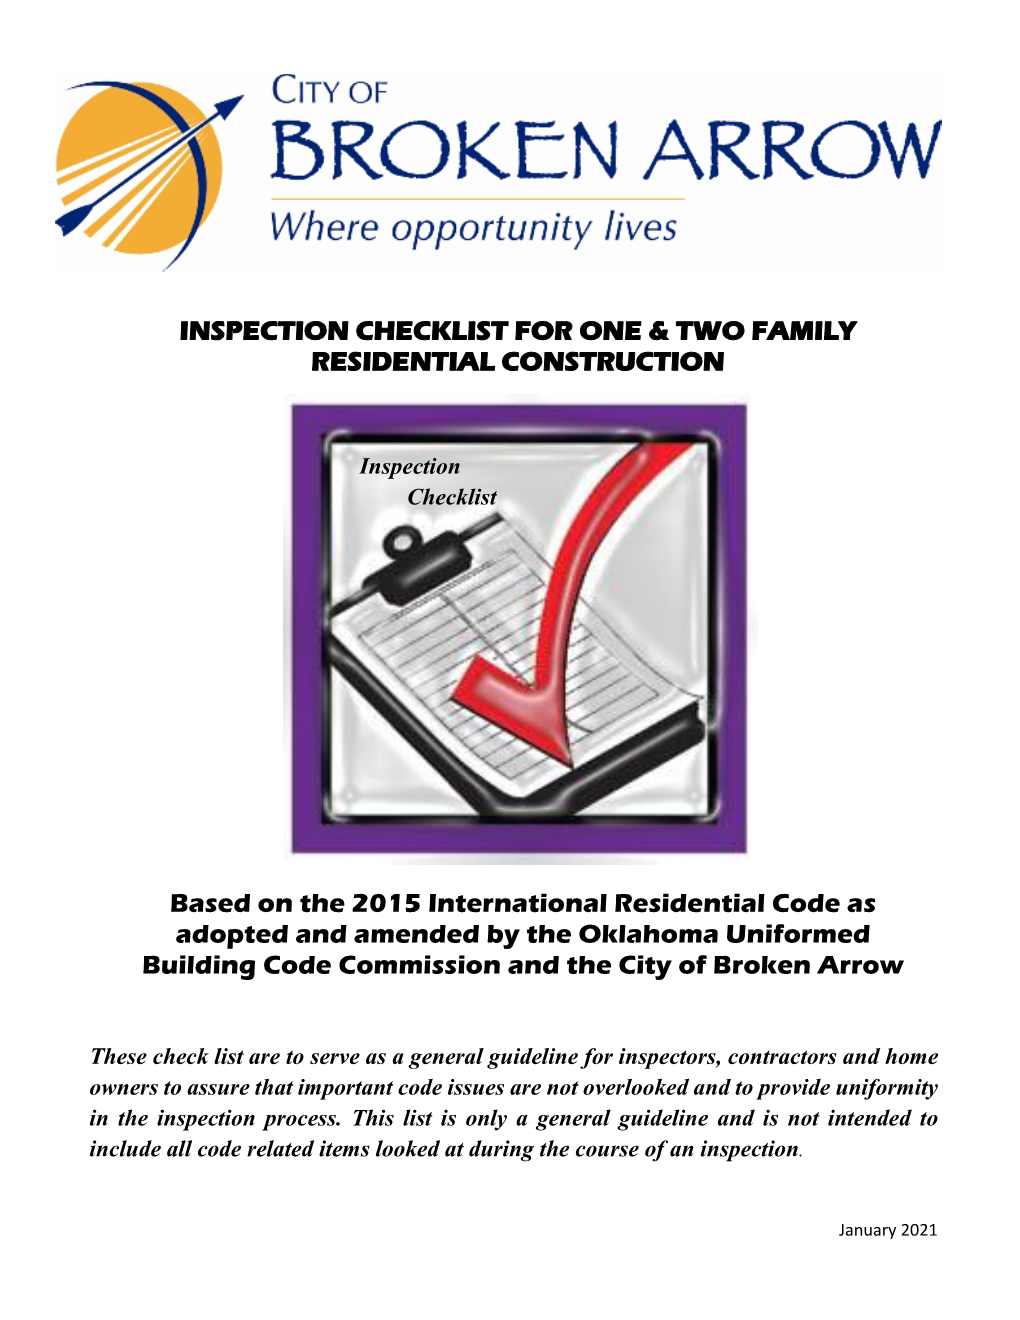 Broken Arrow Residential Construction Inspection Checklist